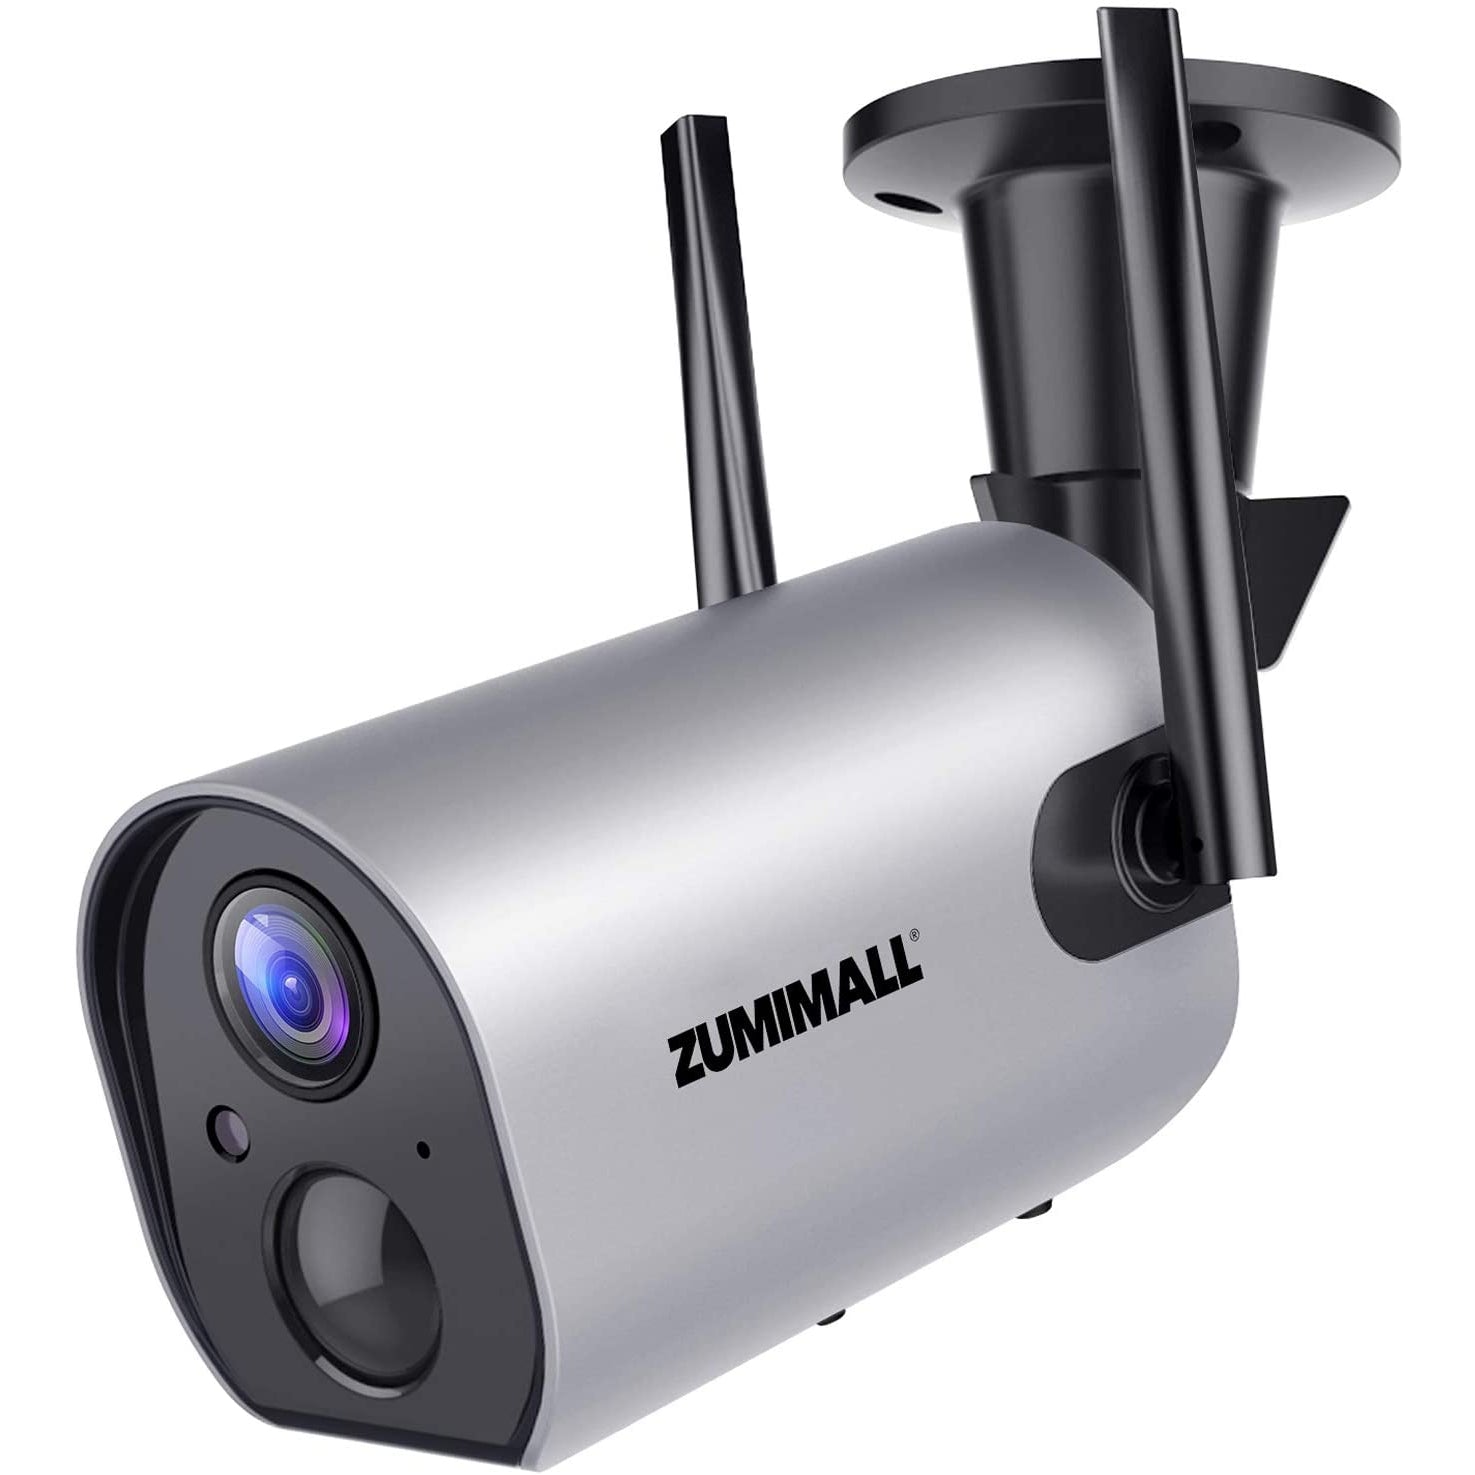 Zumimall Wireless Outdoor Security Camera - Grey